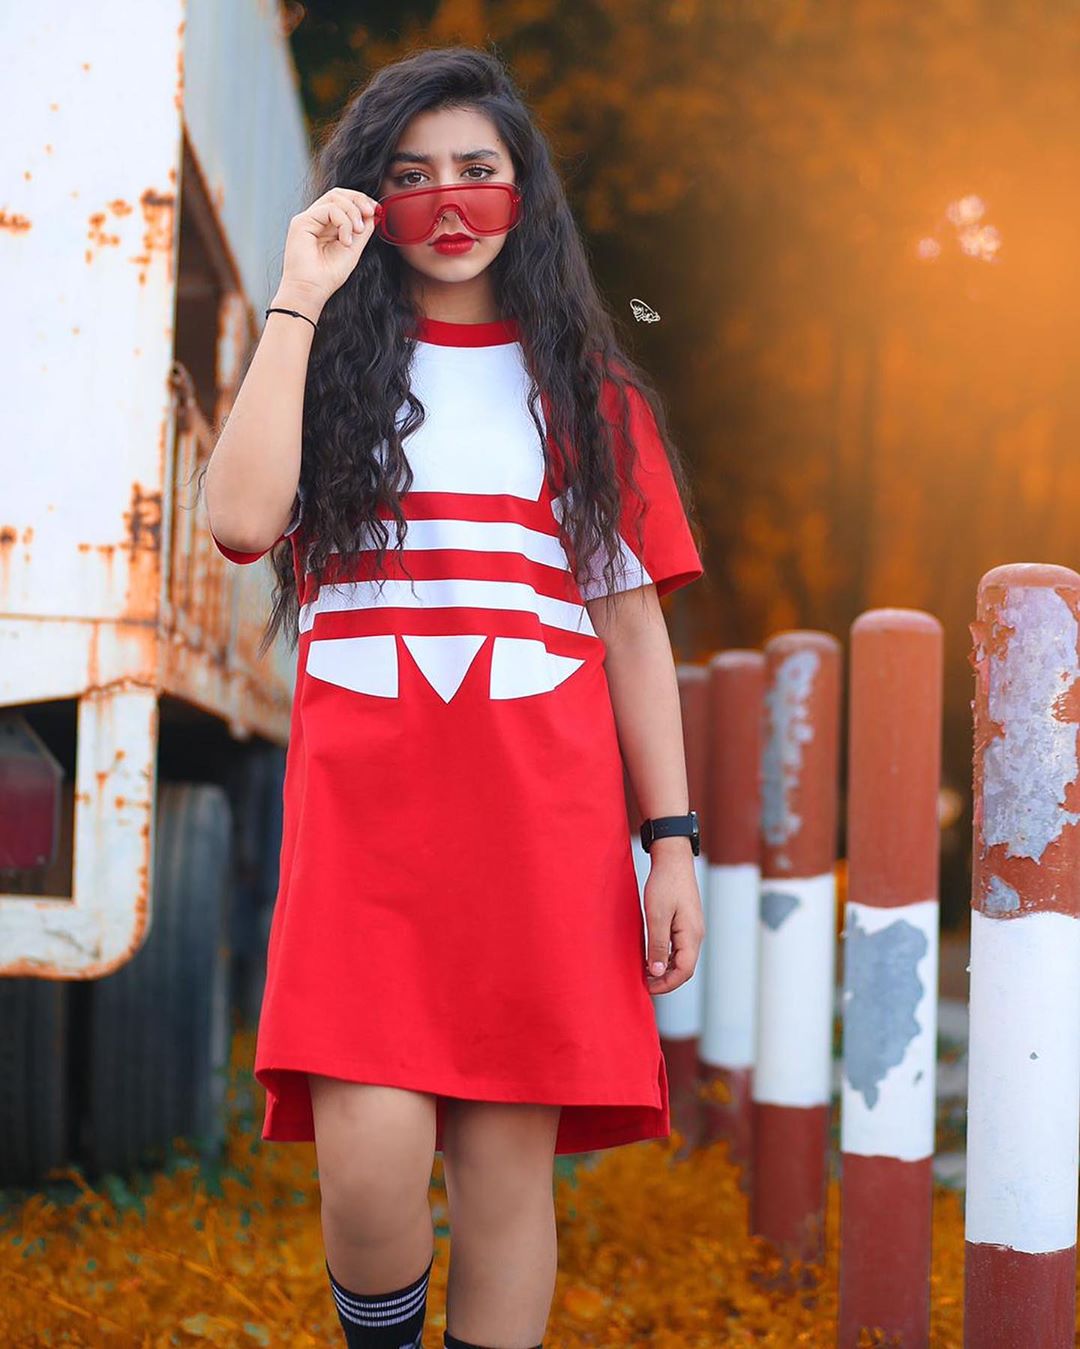 Ghrour Safar Red Dress Teen Girl Photo 04